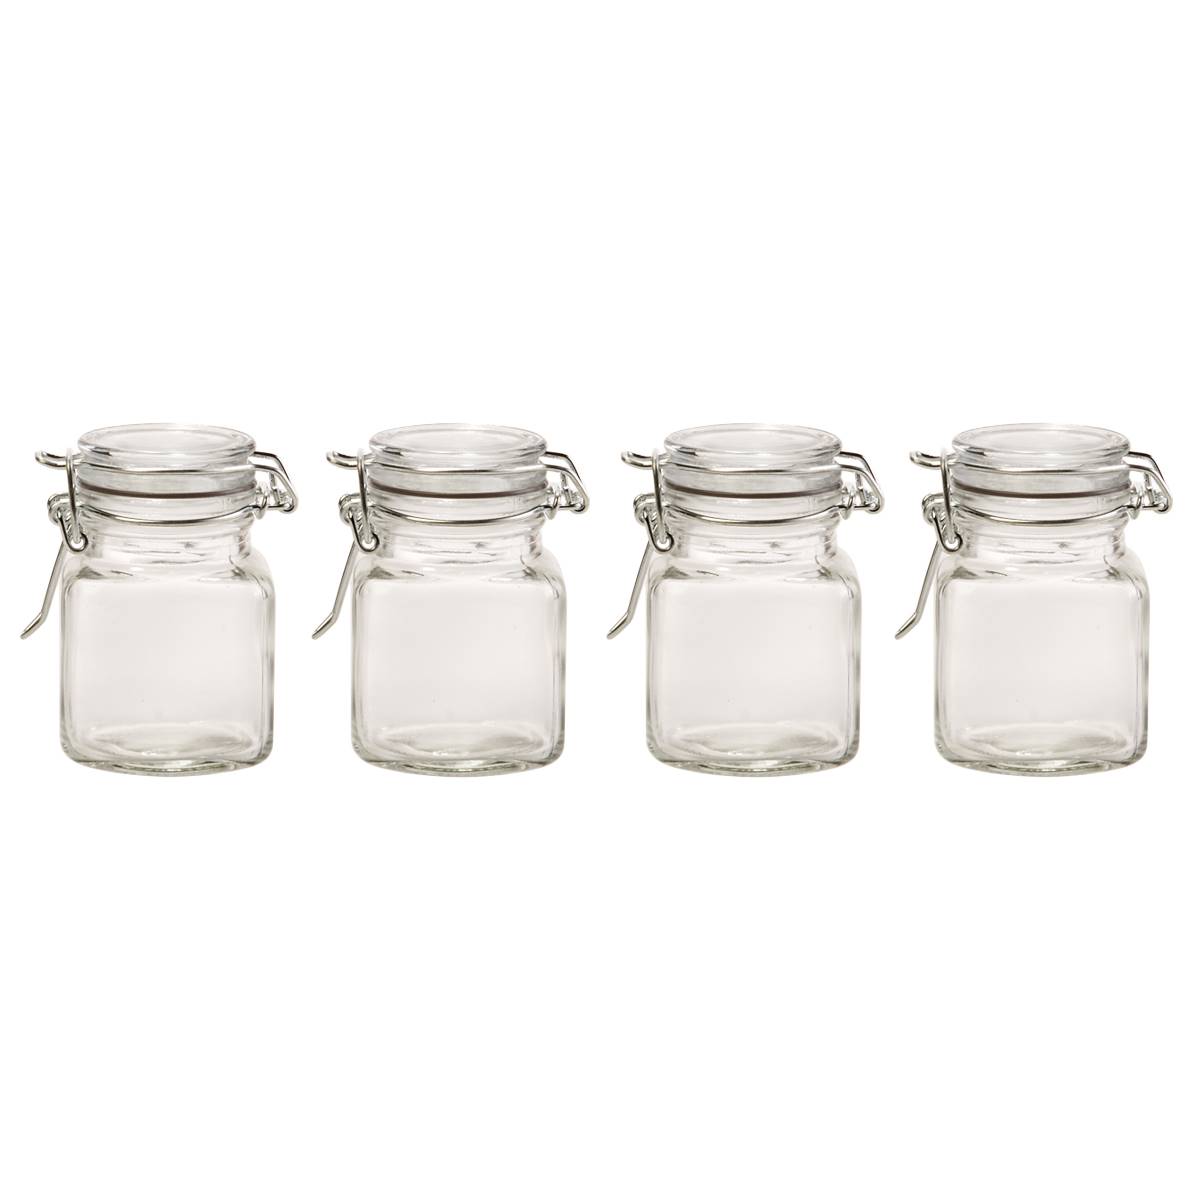 3oz. Grey Spice Jars With Clip Lids - Set Of 4